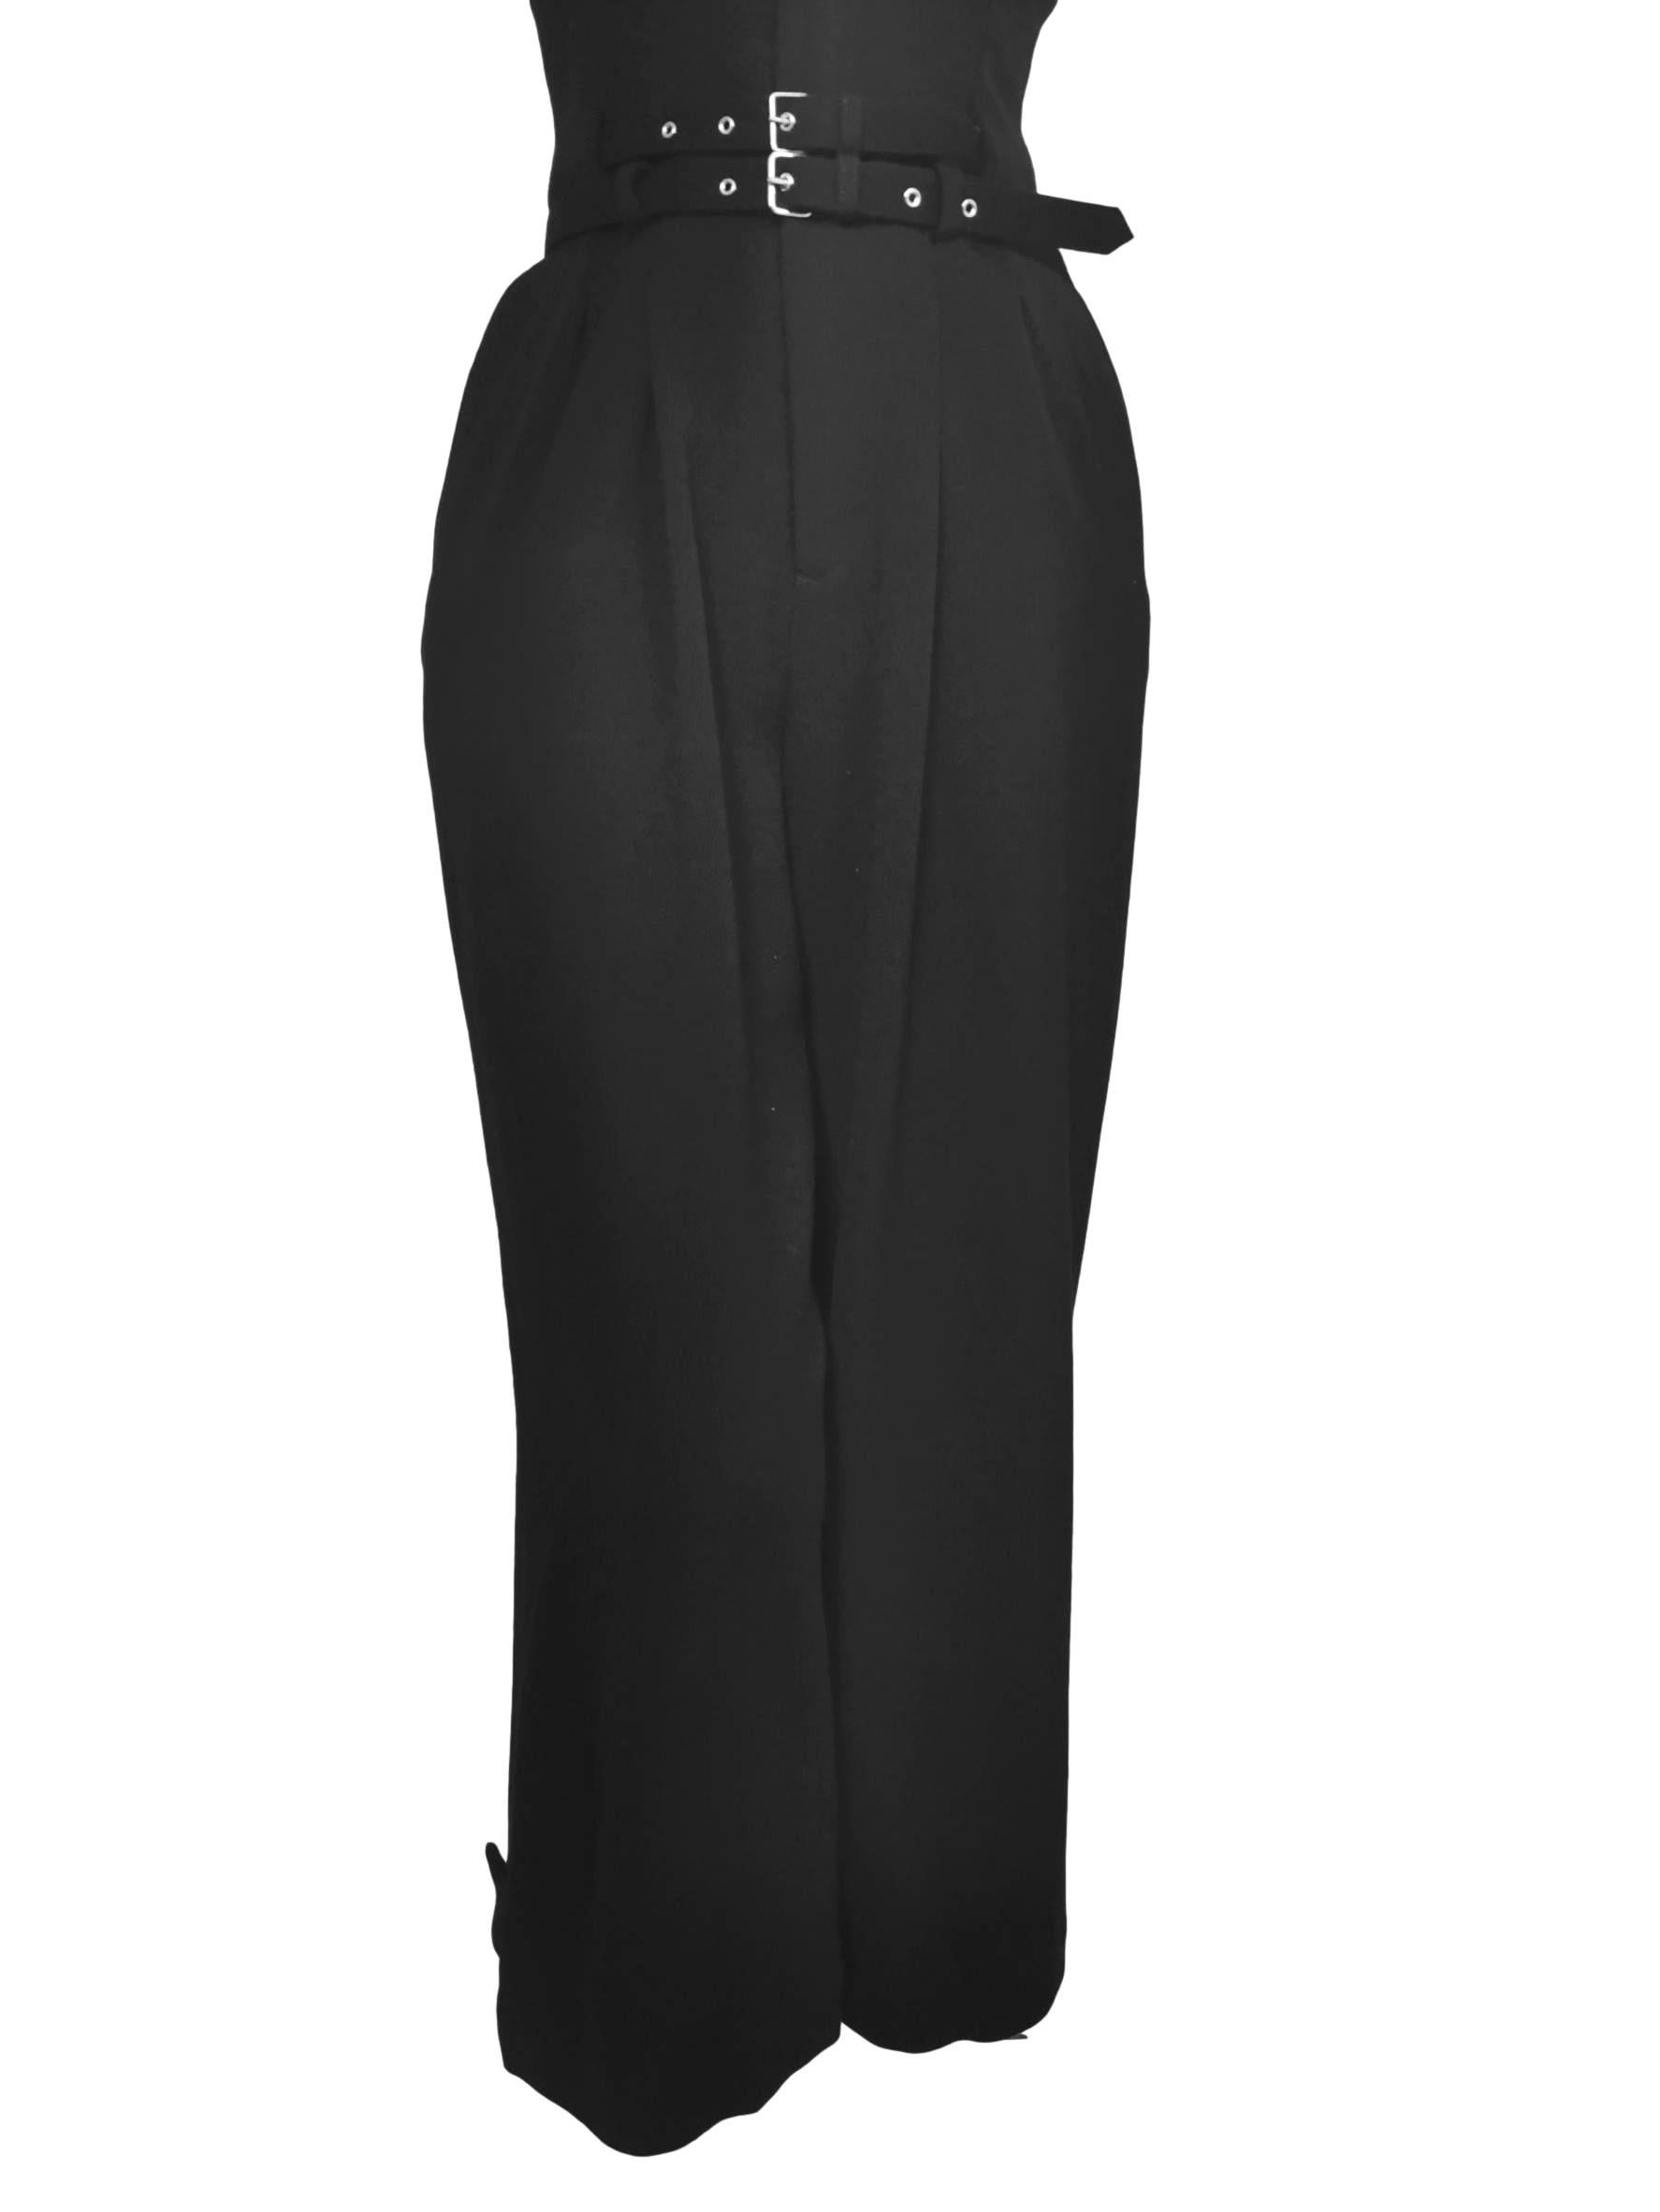 Black Comme des Garcons Wool Double Belted Jumpsuit AD 1989 For Sale